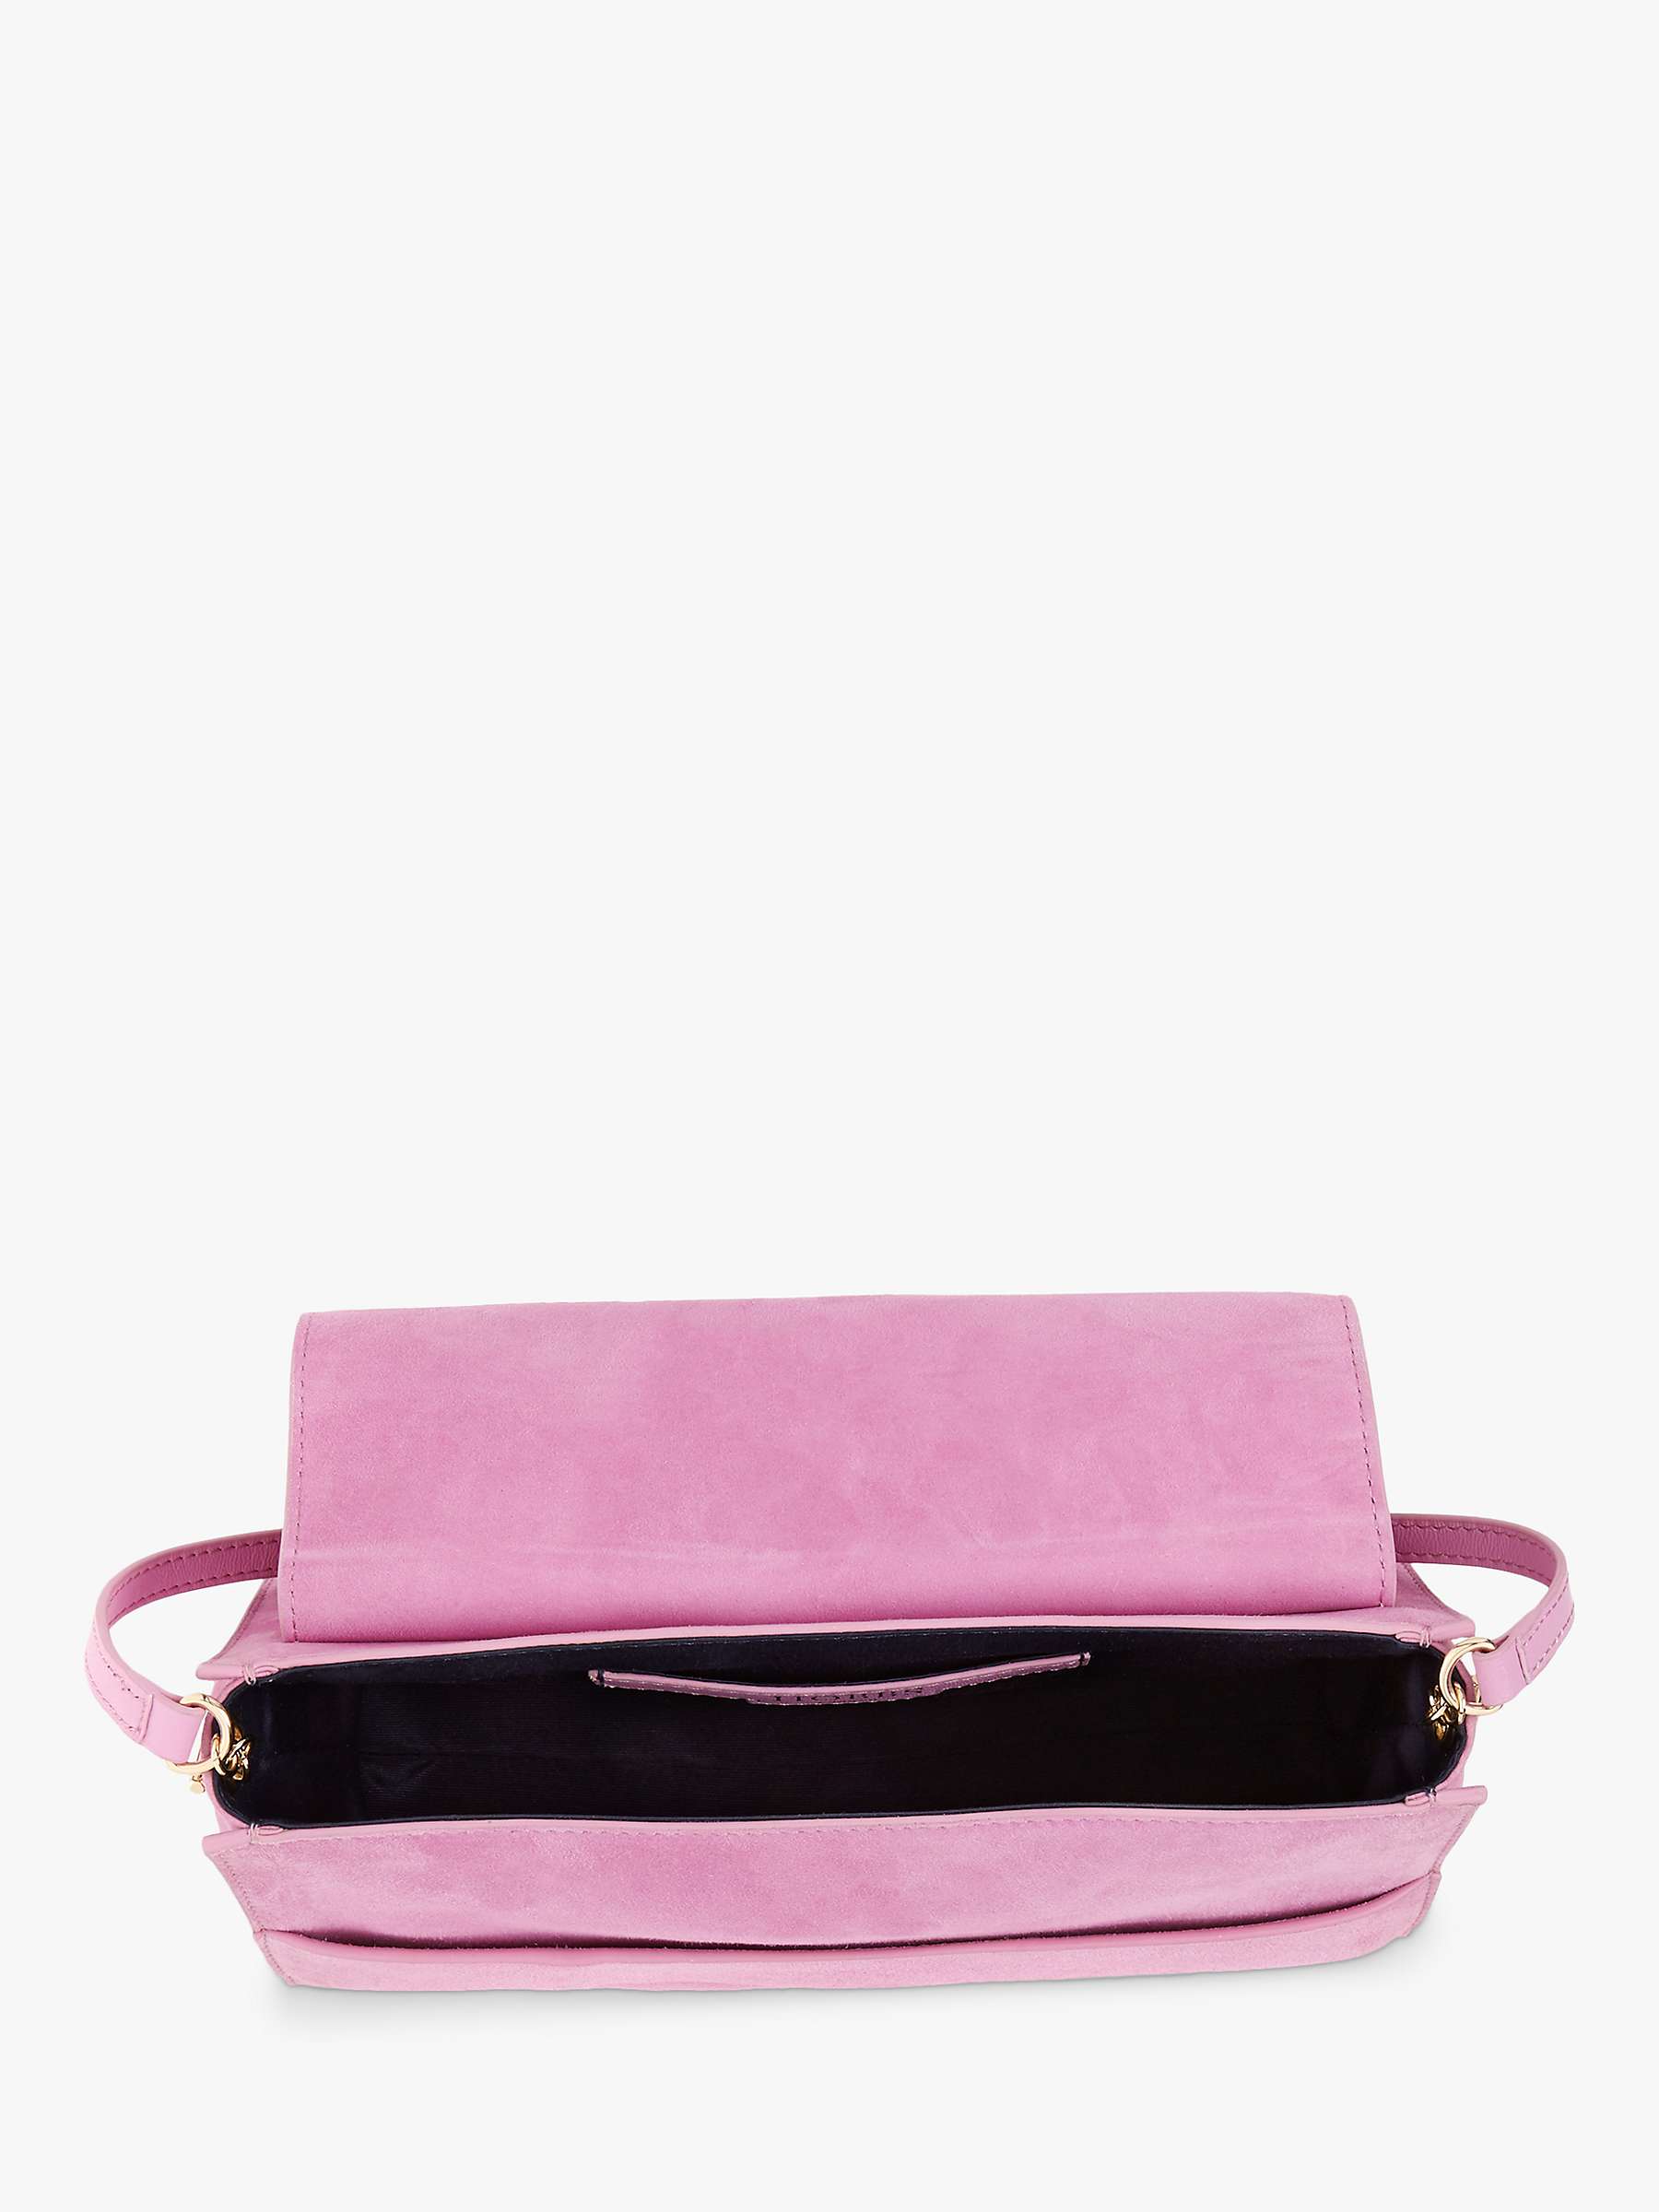 Buy Hobbs Cambridge Leather Clutch Bag, Carnation Pink Online at johnlewis.com